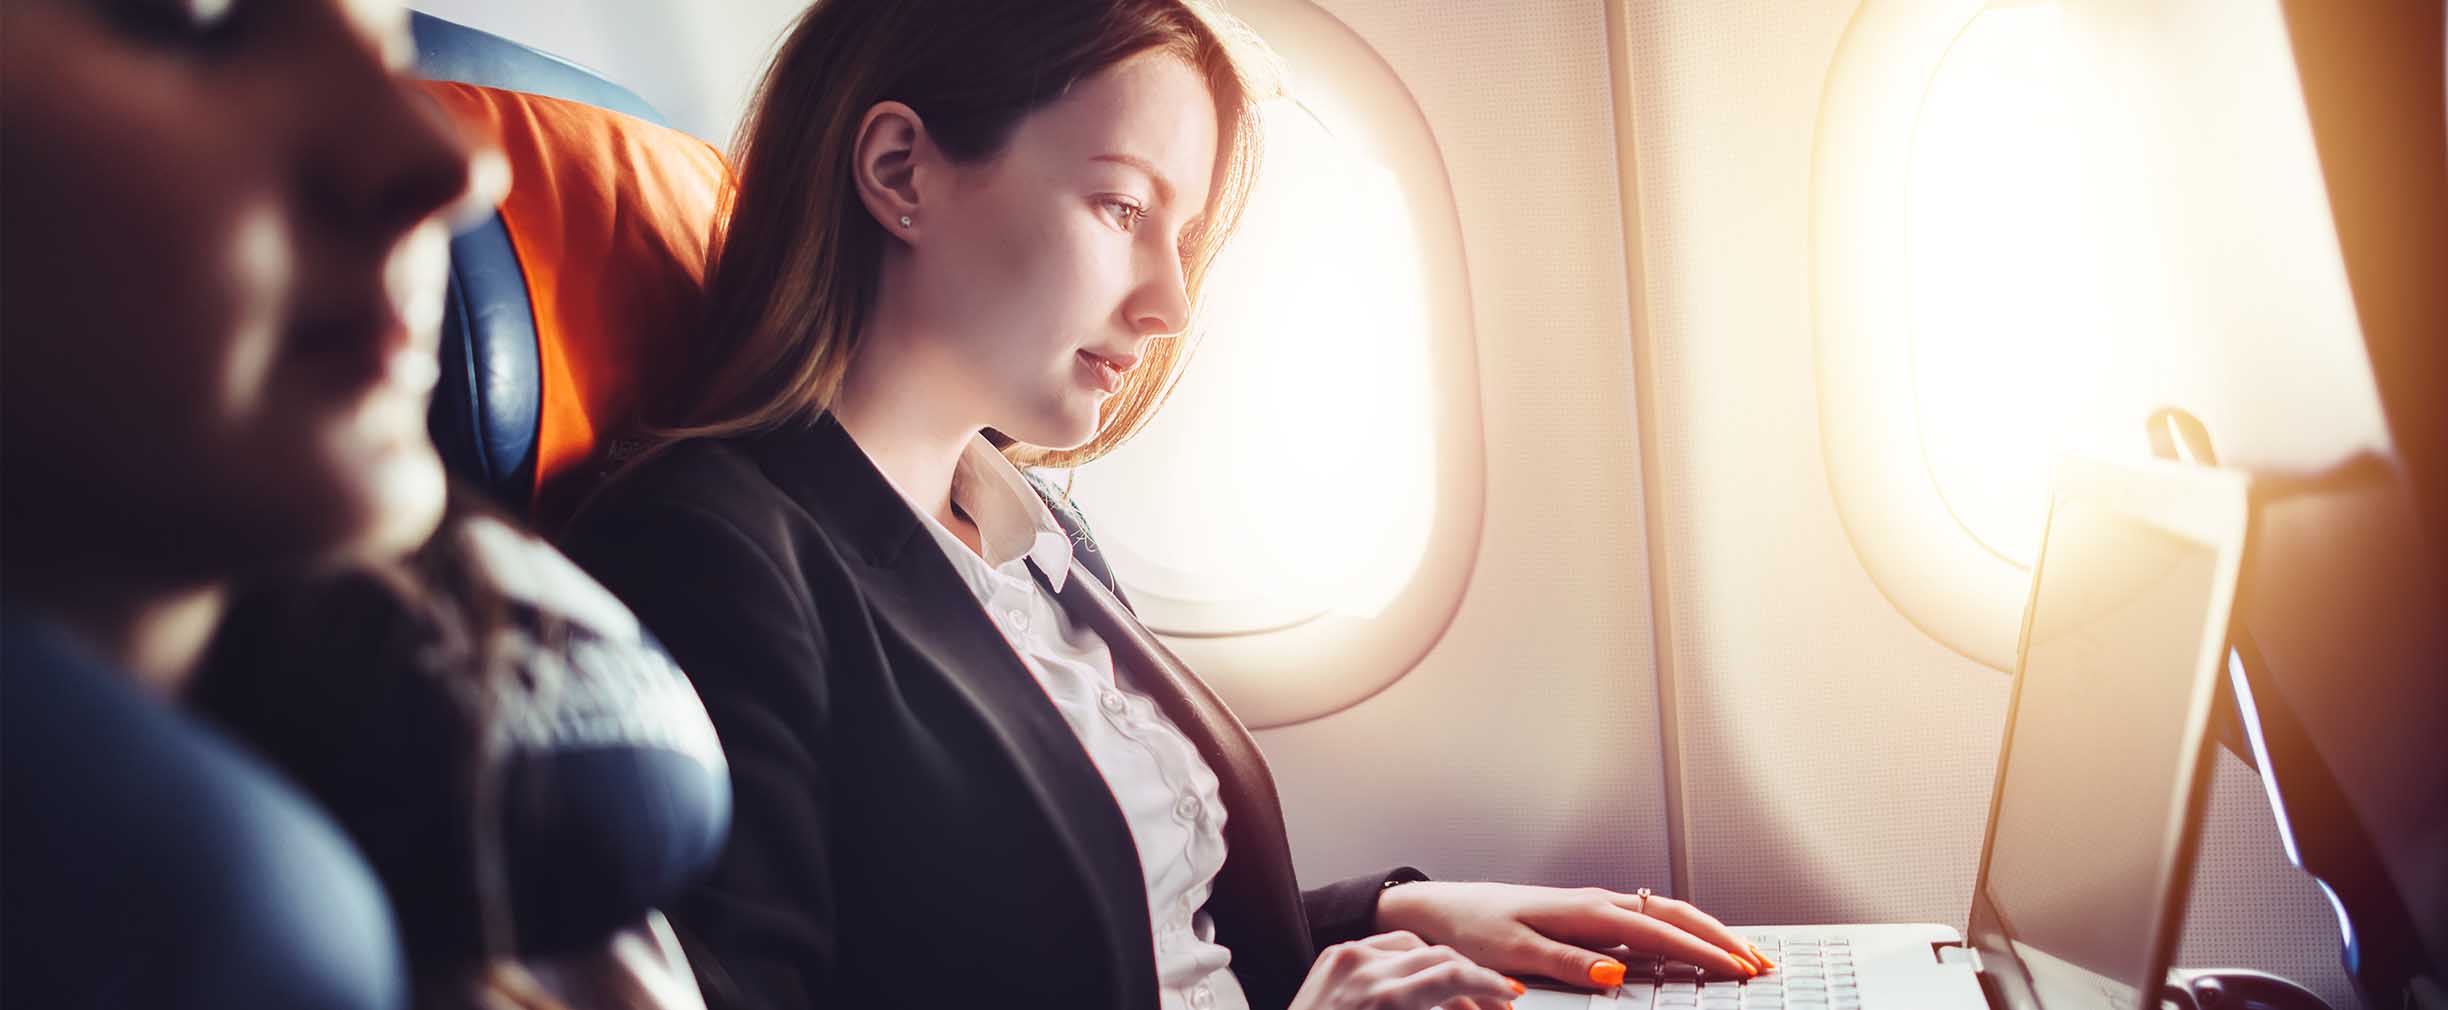 business traveler working on laptop during flight